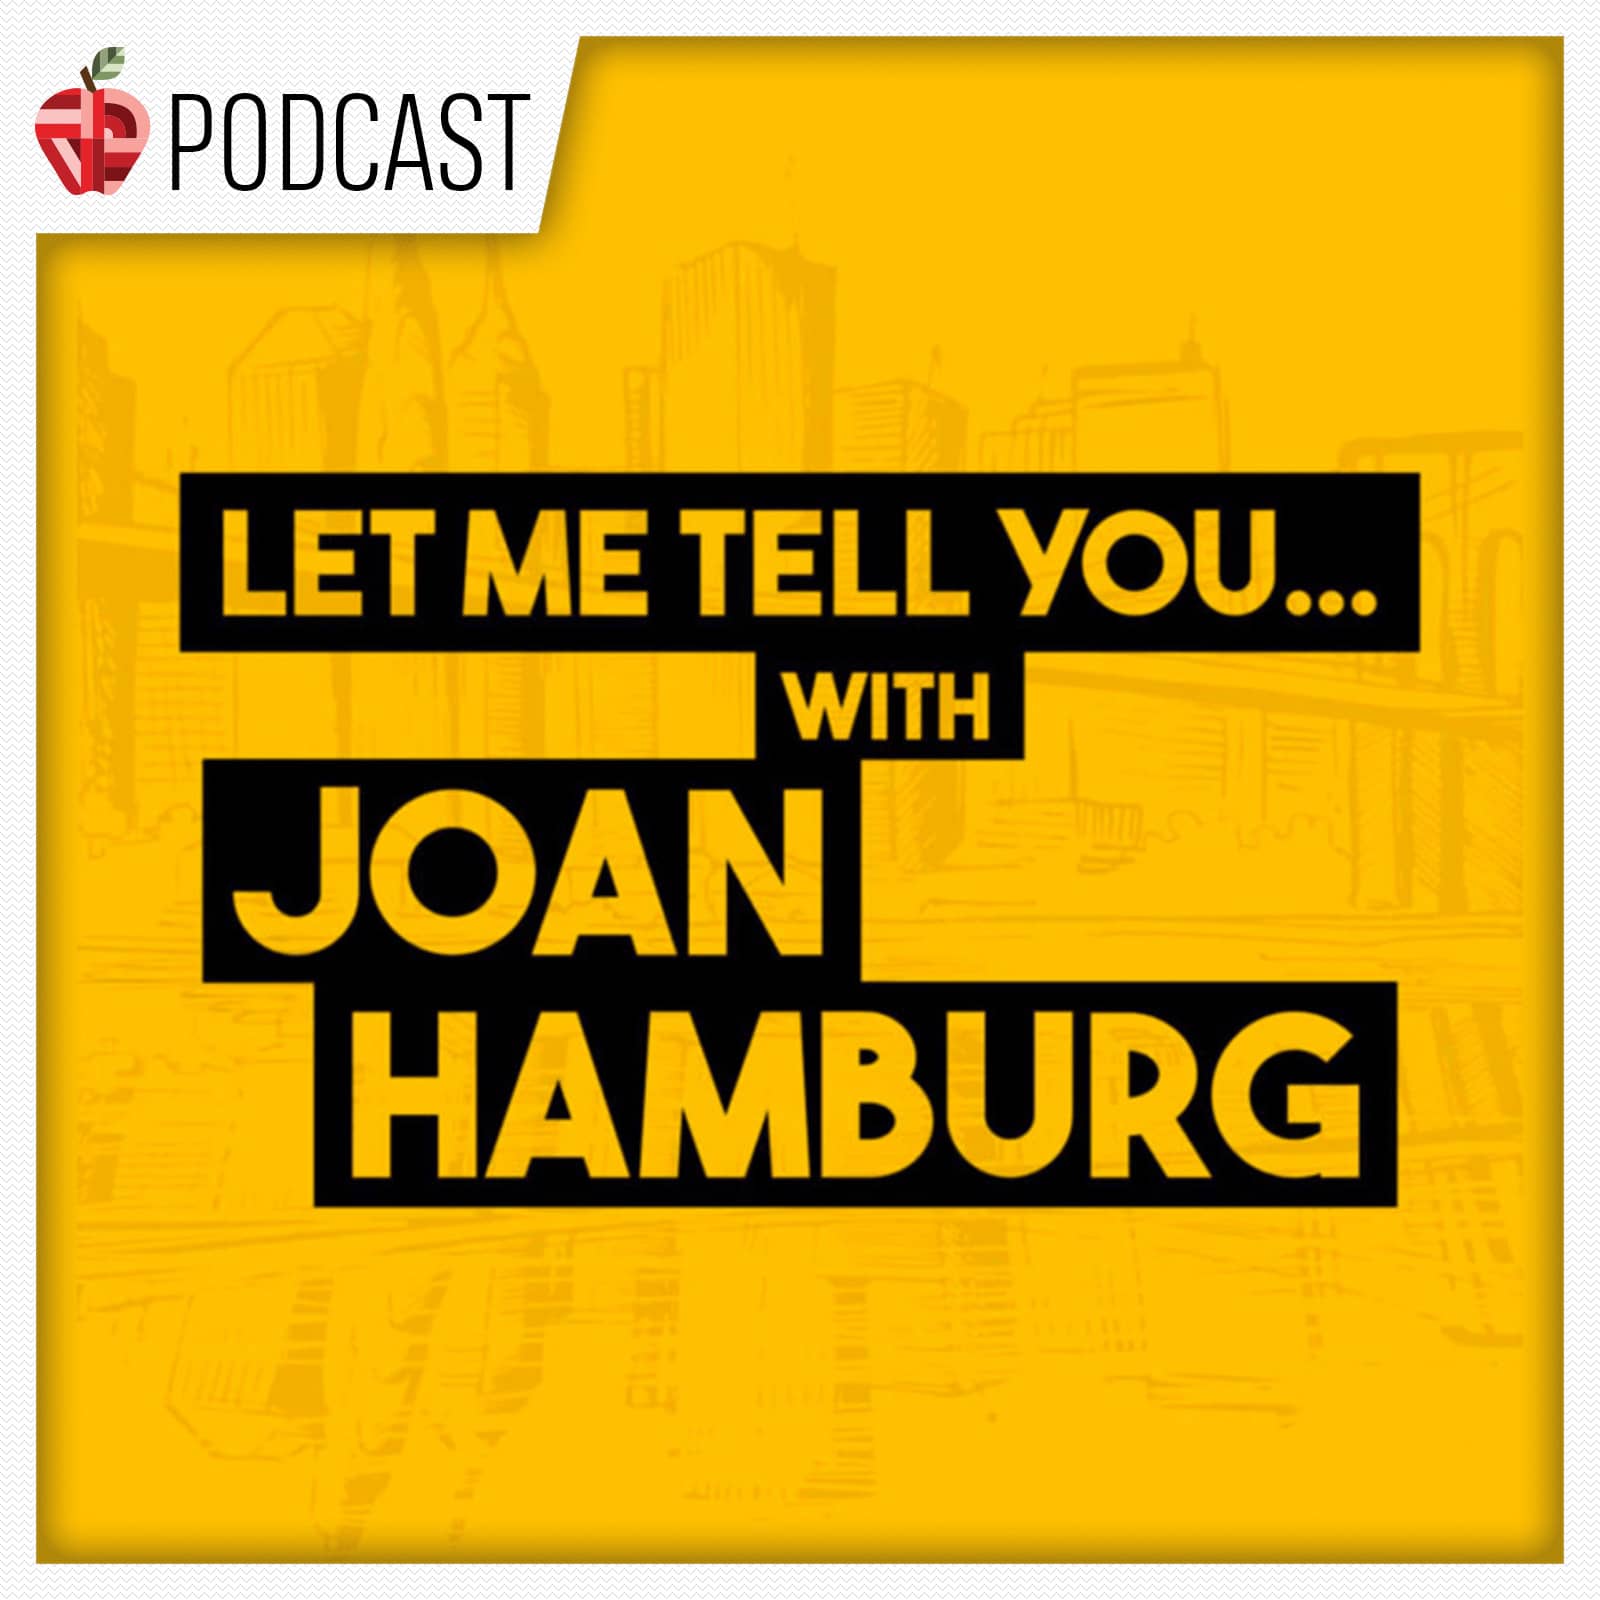 joan-hamburg-let-me-tell-you-podcast-podcast-logo-17